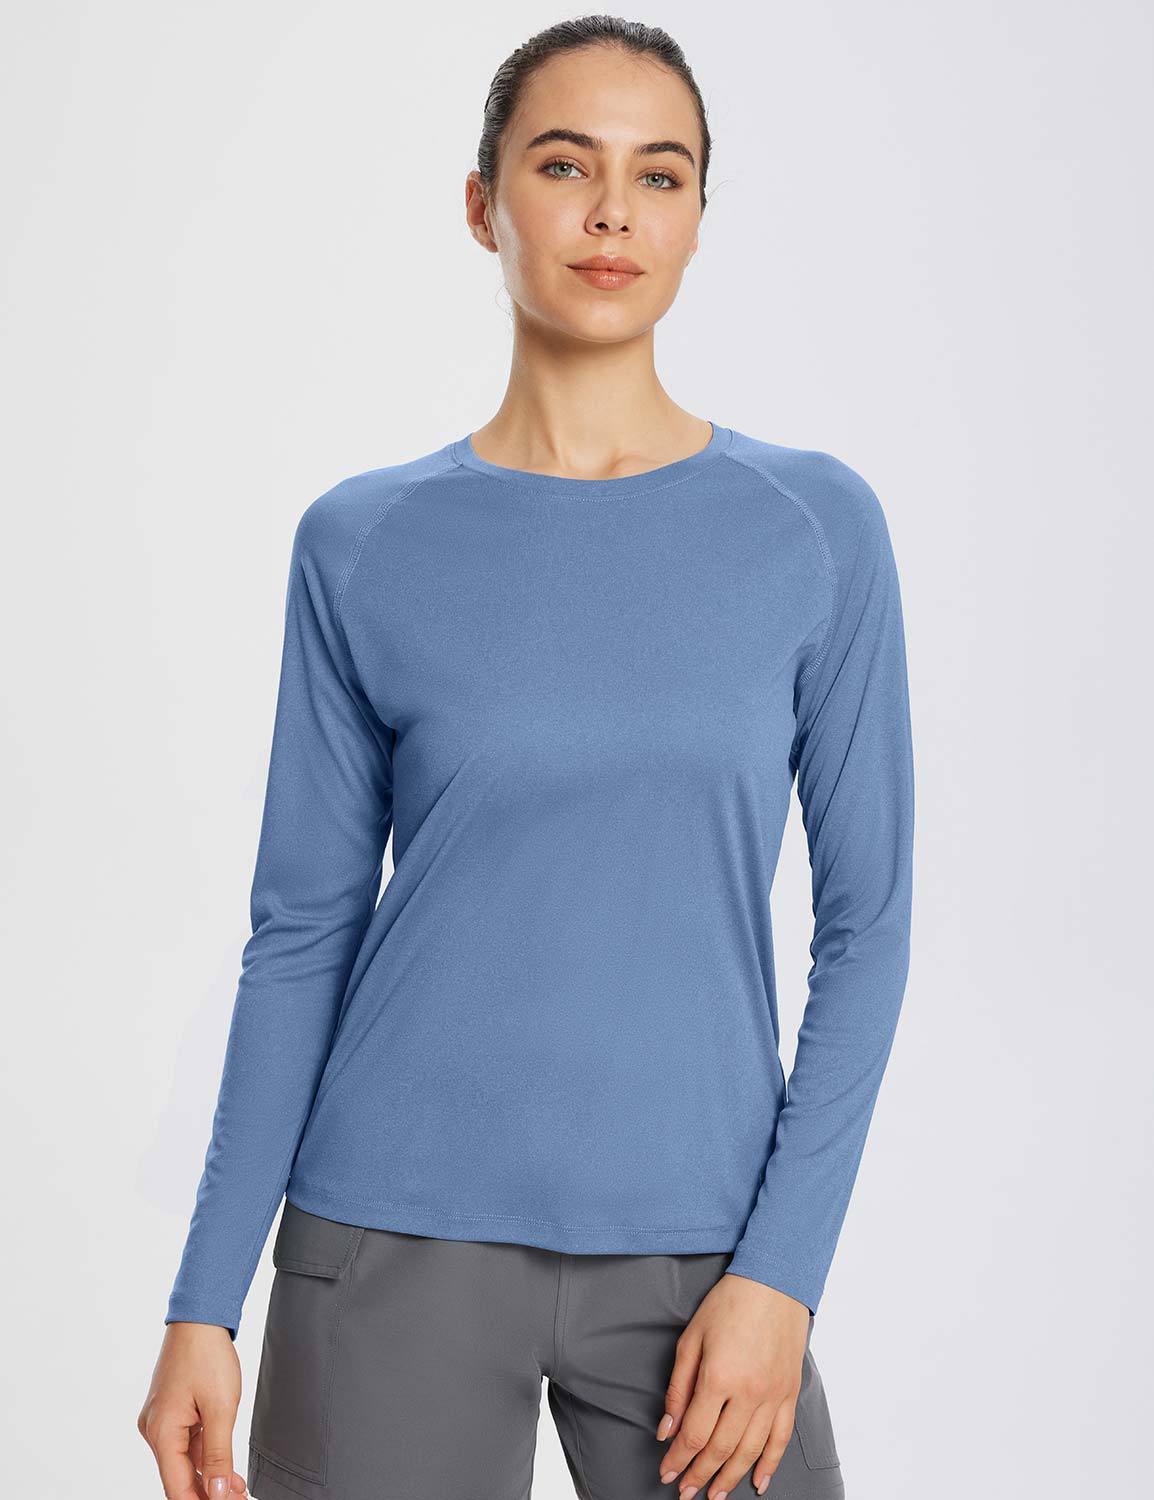 BALEAF Women's Fleece Thermal Long Sleeve Running Shirt